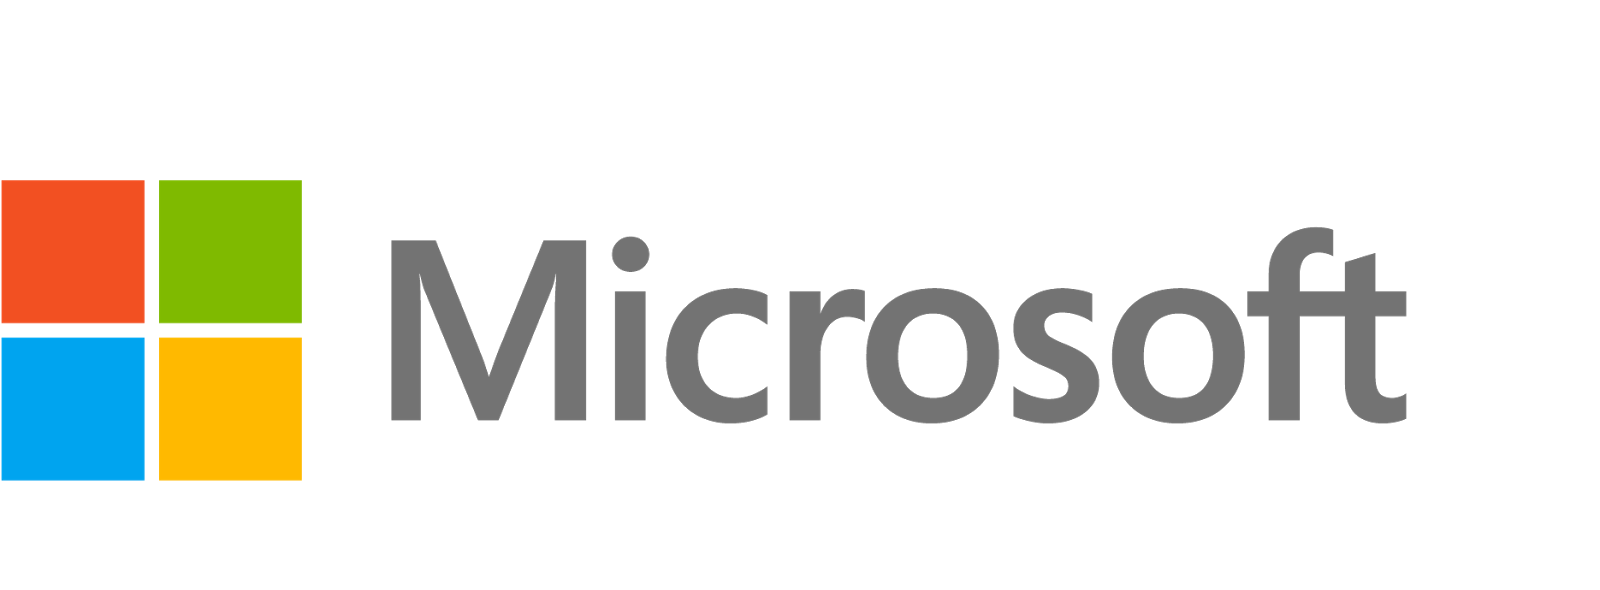 Microsoft Rewards Logo - Microsoft launching Microsoft's Rewards program 2017 in UK State